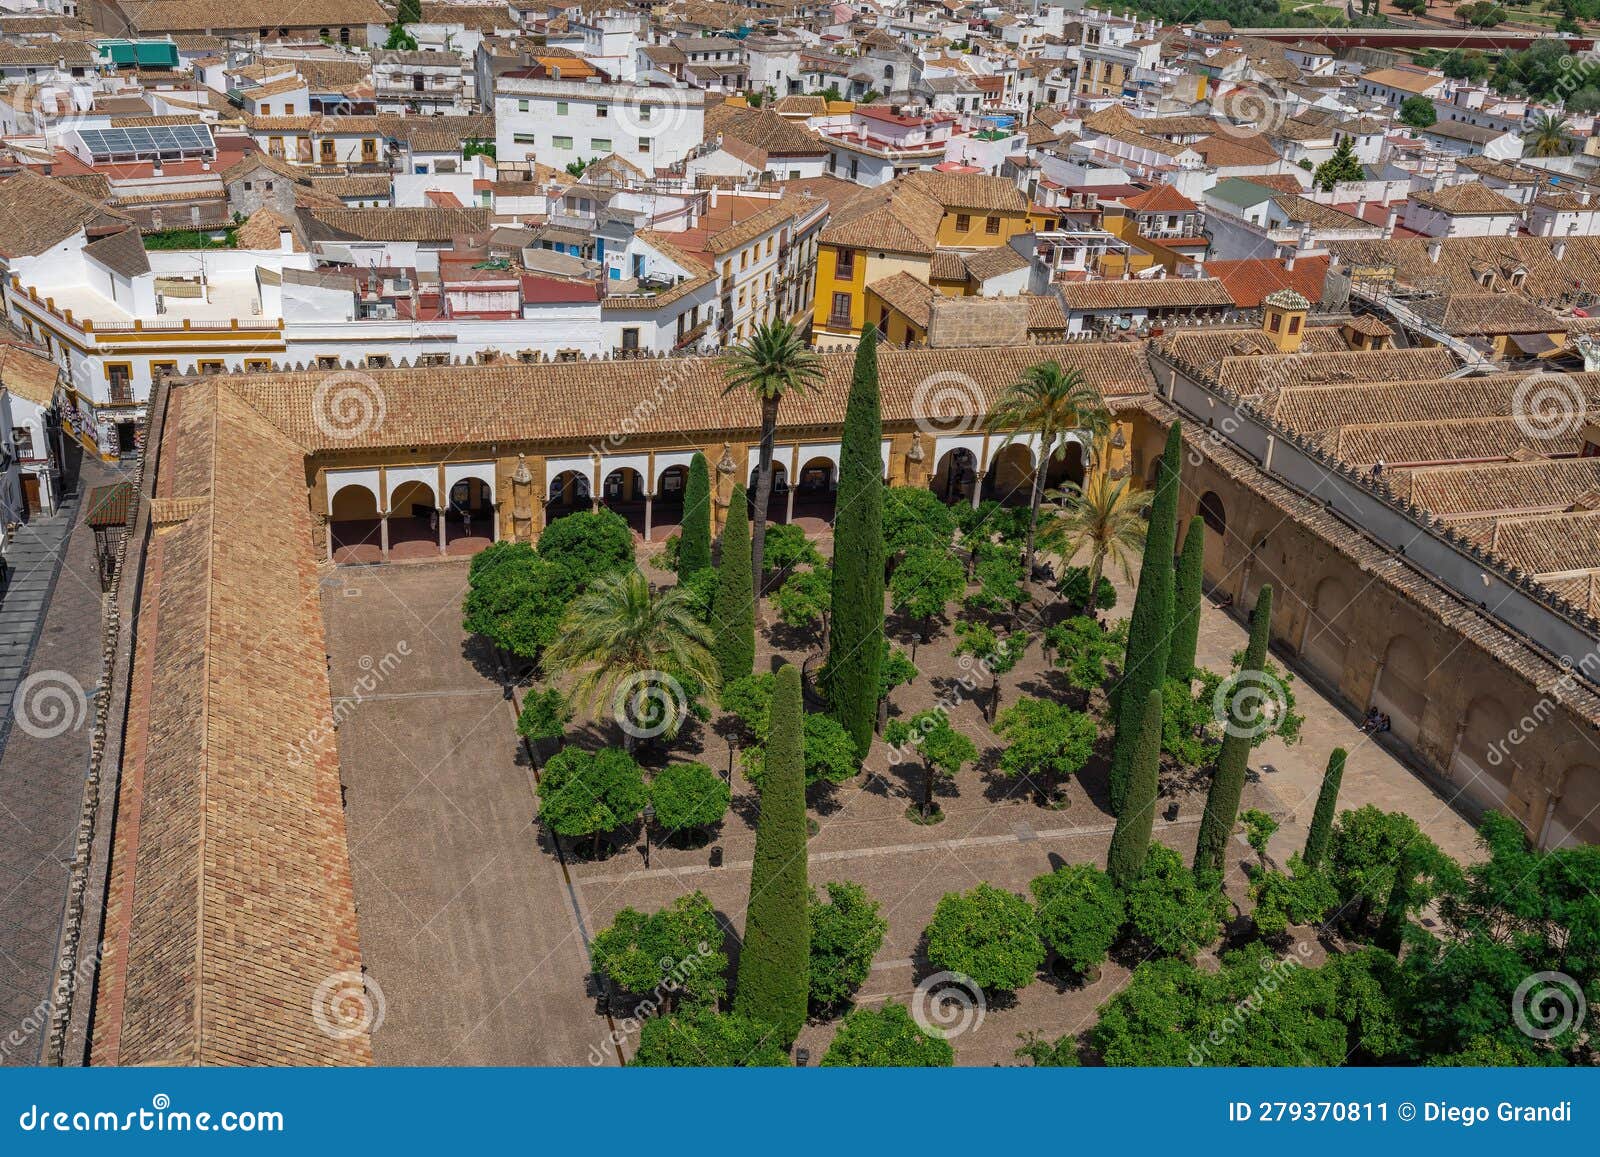 patio de los naranjos courtyard of mosque-cathedral of cordoba aerial view - cordoba, spain